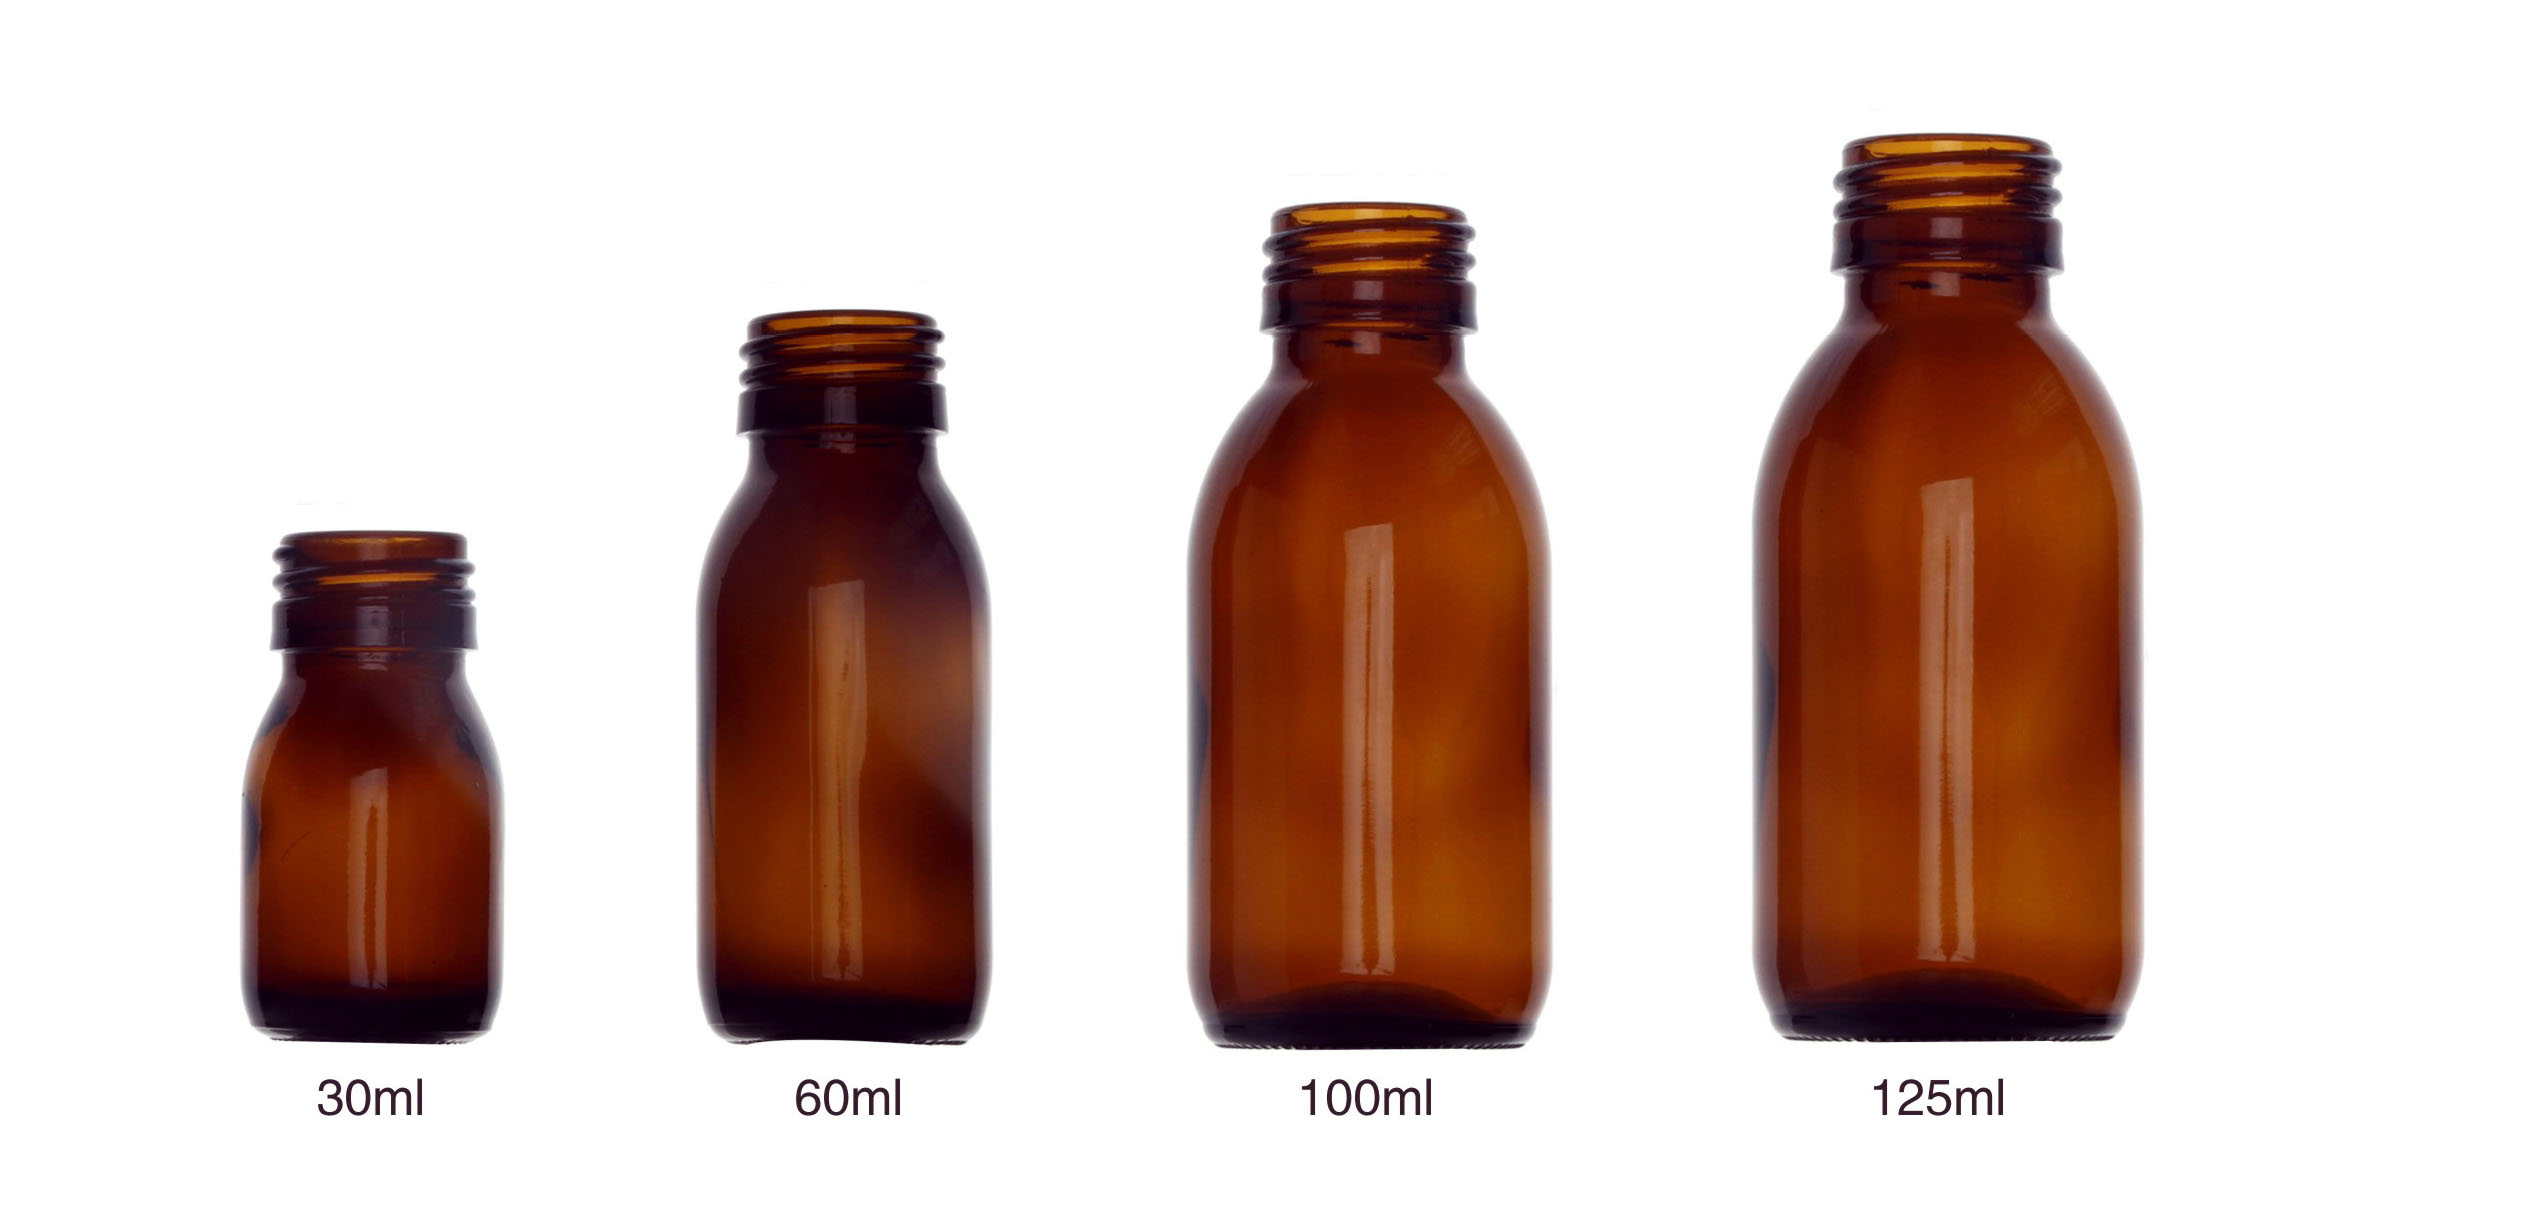 syrup bottles amber glass bottle wholesale  - copy